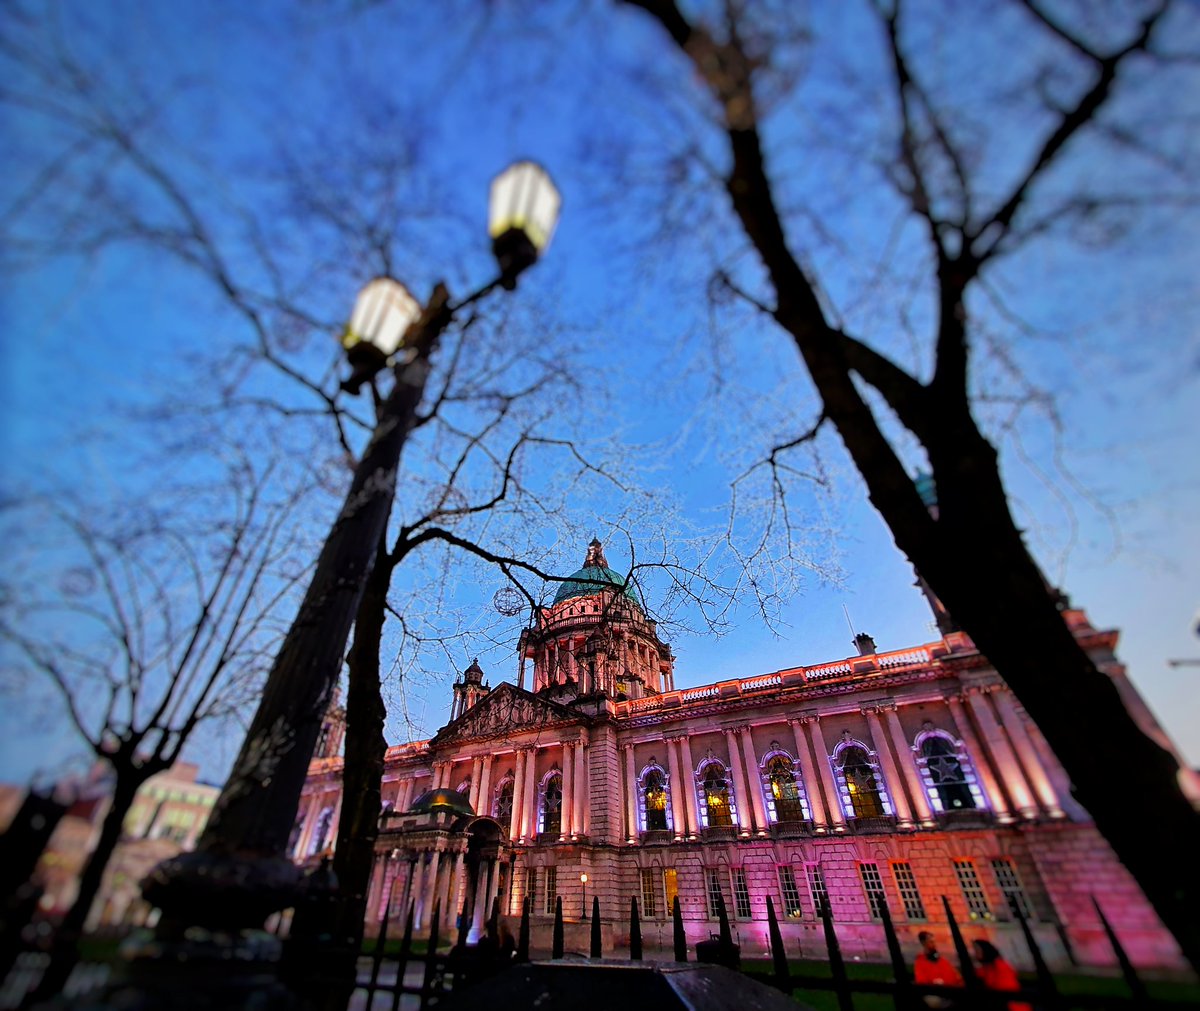 Belfast City Hall looking a little bit Christmassy! @belfastcc @love_belfast @BelfastHourNI @BelfastLive #belfast #Christmas2018